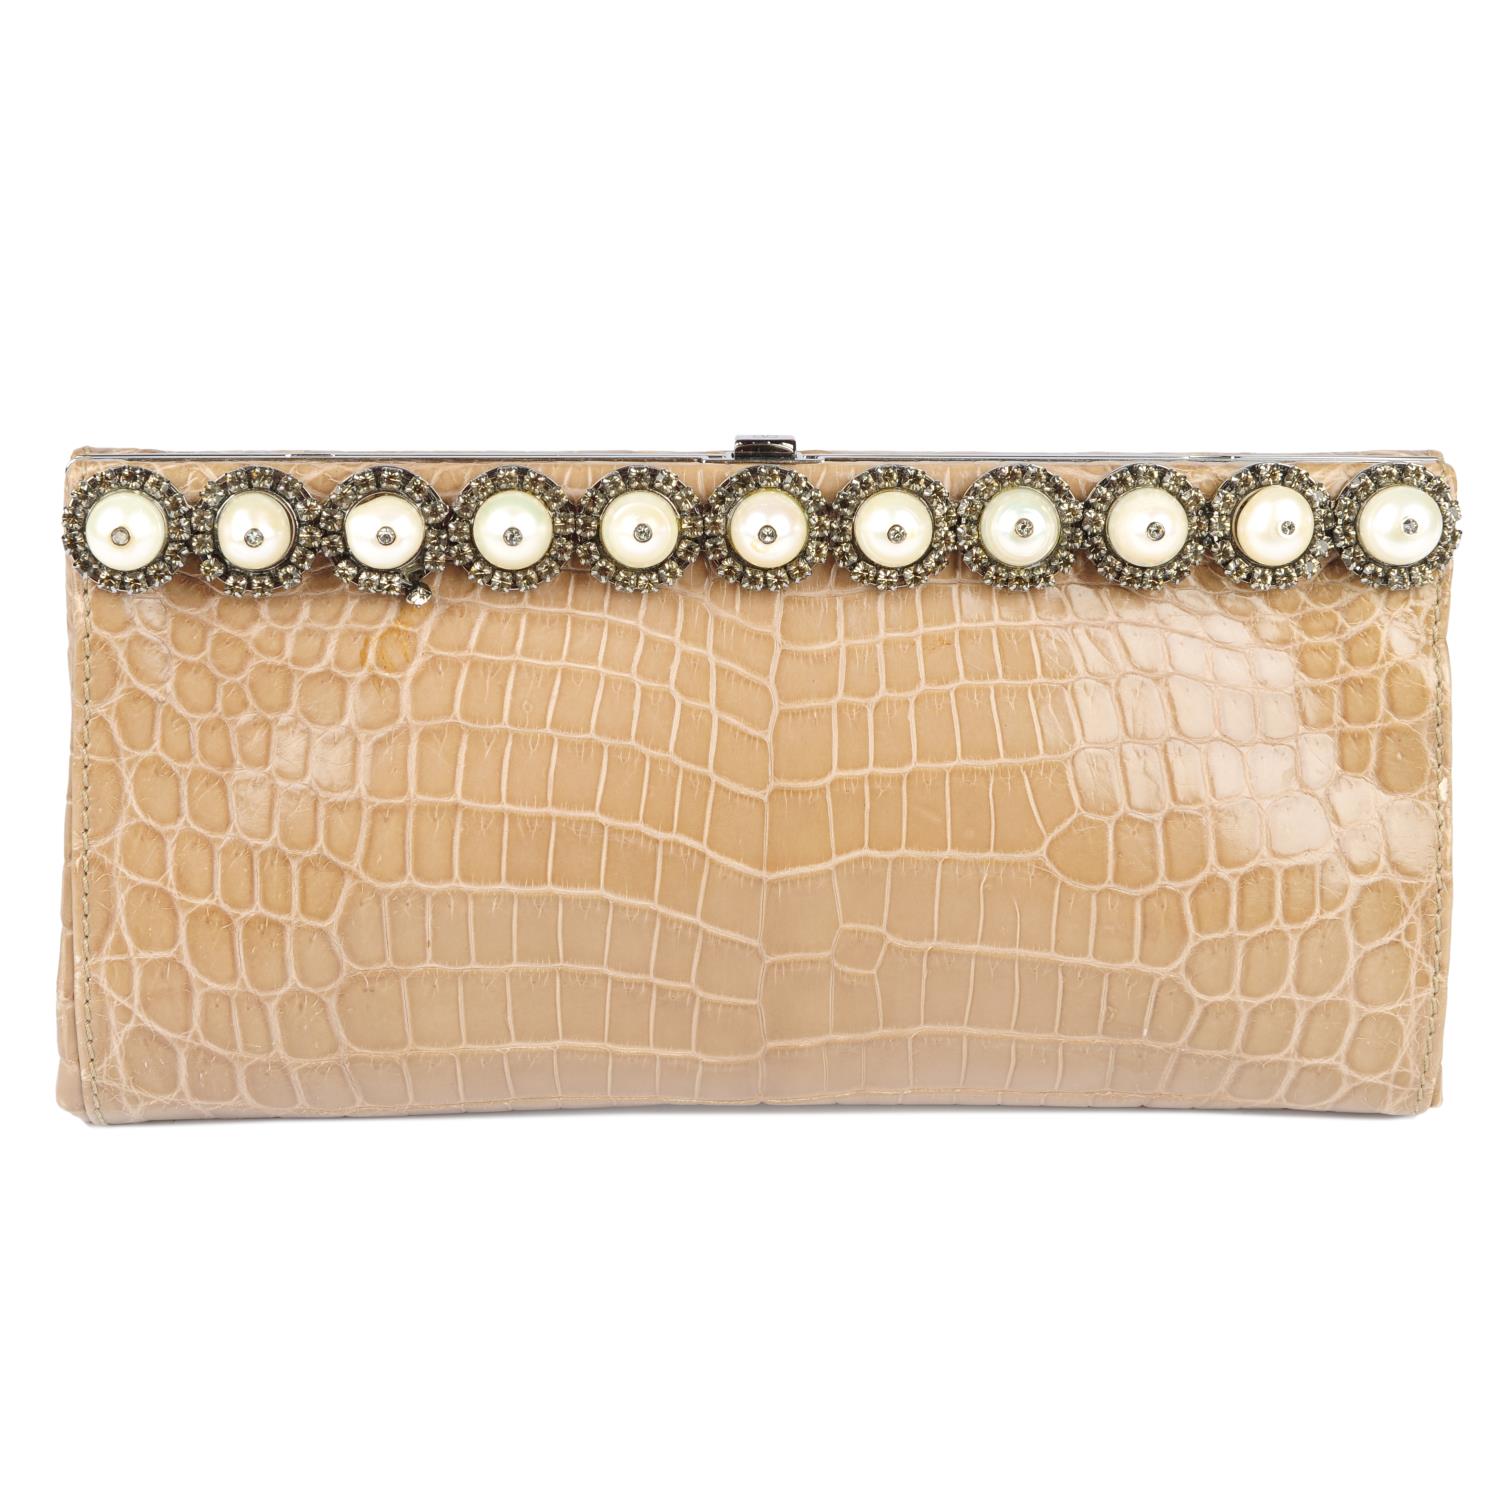 VALENTINO - a cultured pearl, rhinestone embellished crocodile clutch.